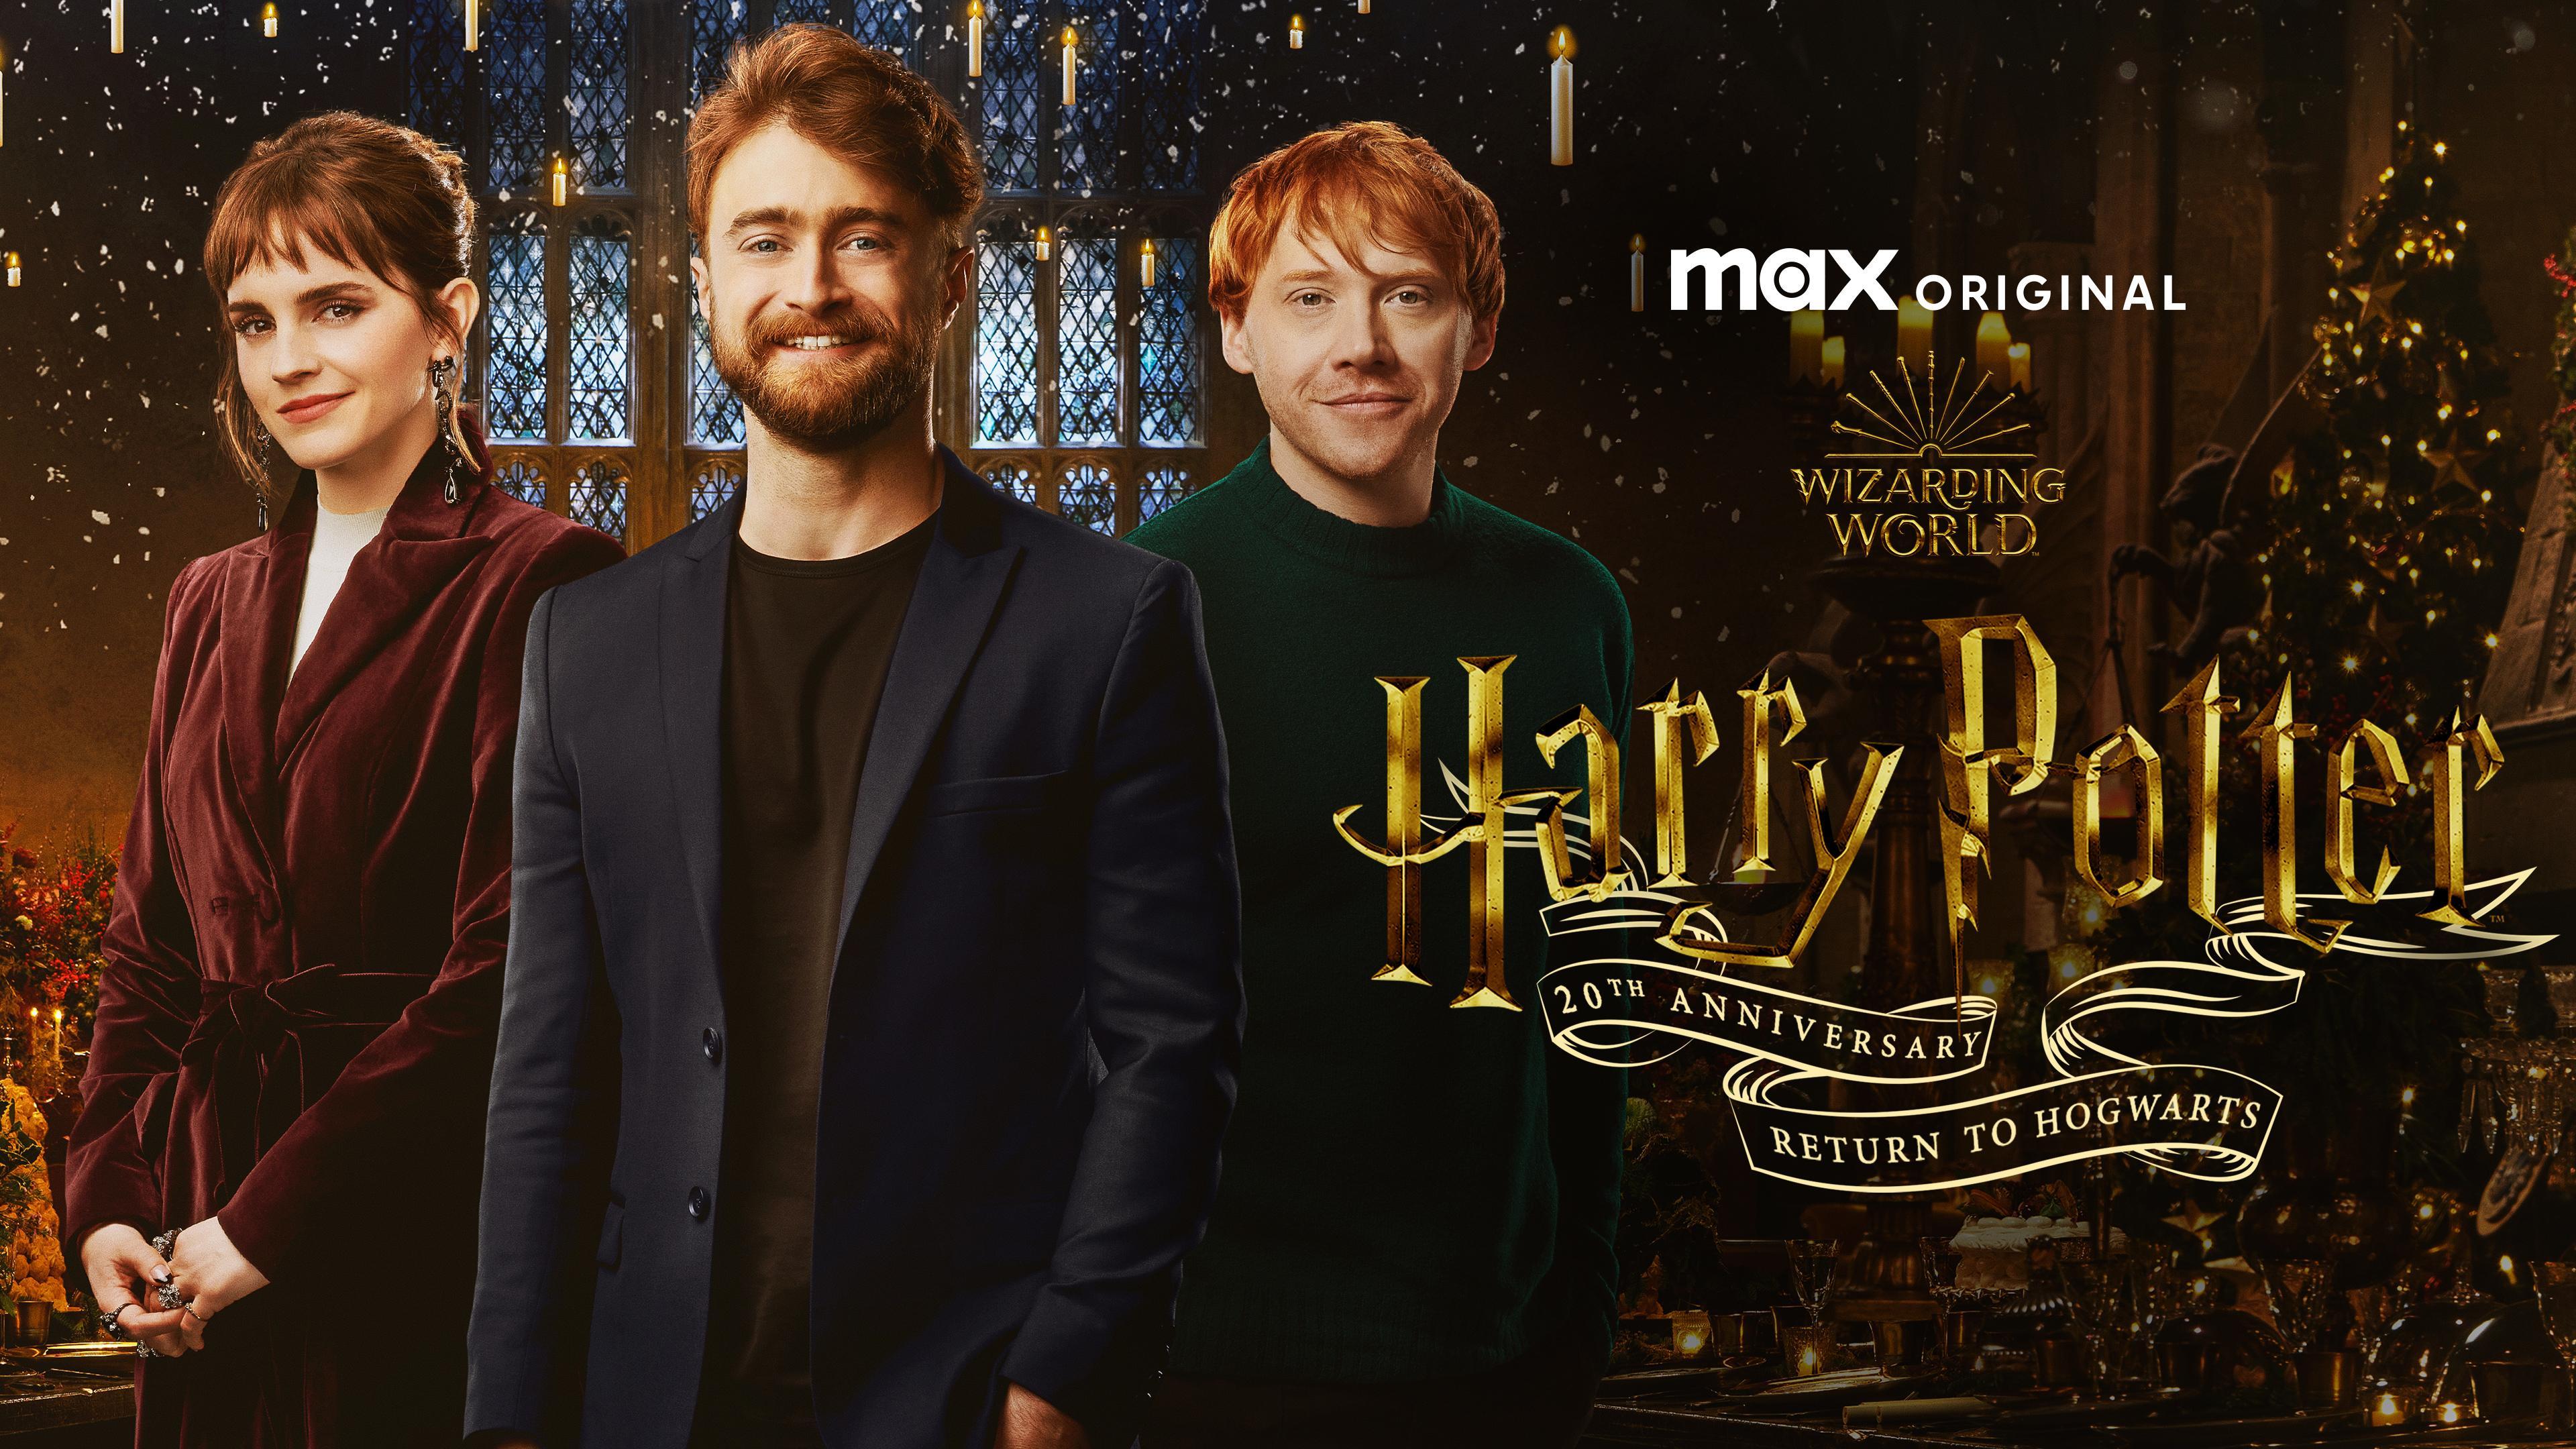 HBO Max  Assine e tenha acesso a Champions League, Harry Potter